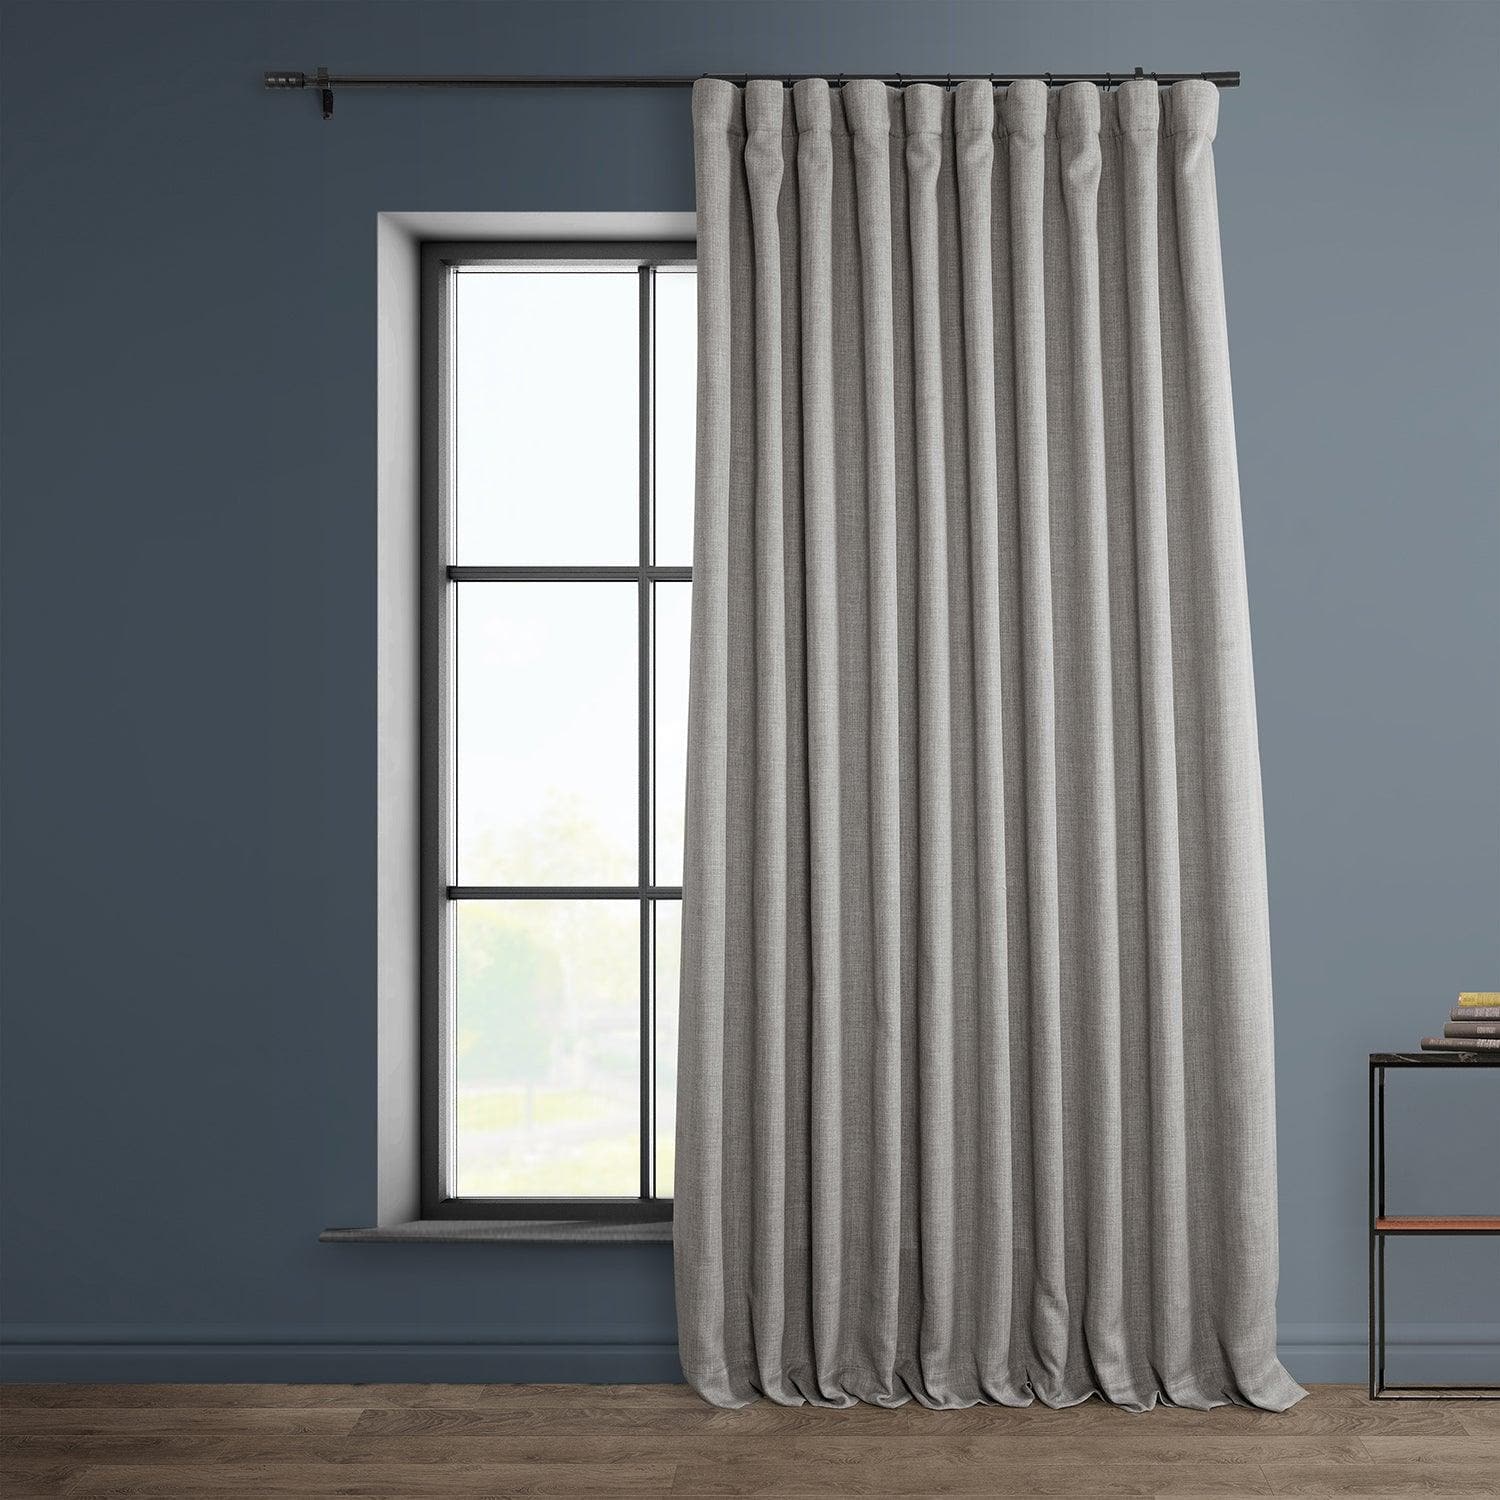 Clay Extra Wide Textured Faux Linen Room Darkening Curtain